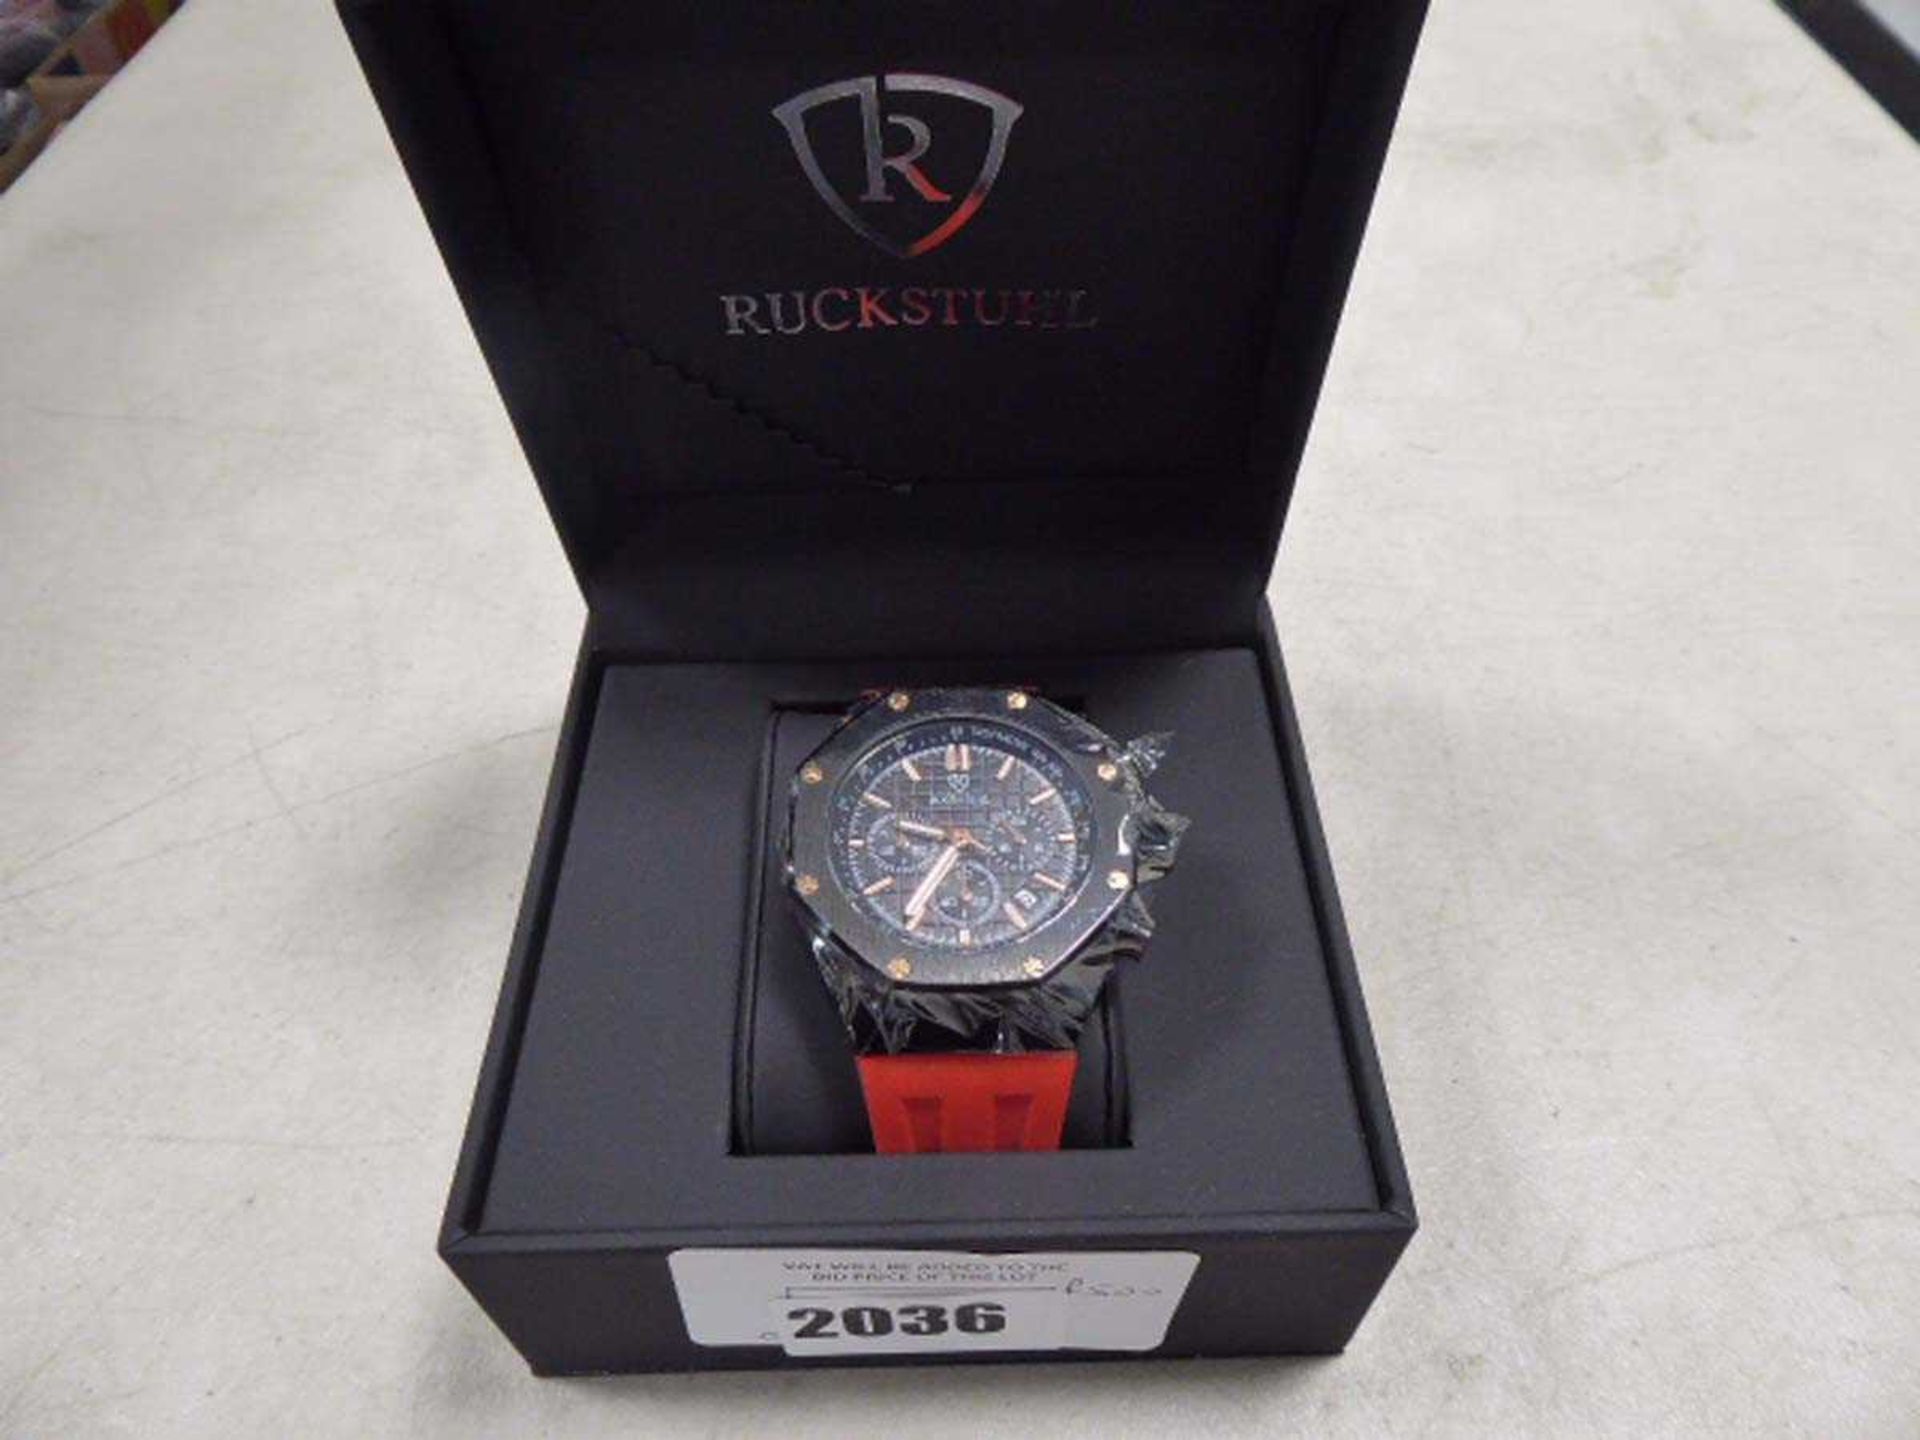 +VAT Ruckstuhl rubberised strap chronograph wrist watch model R500 with box - Image 2 of 2